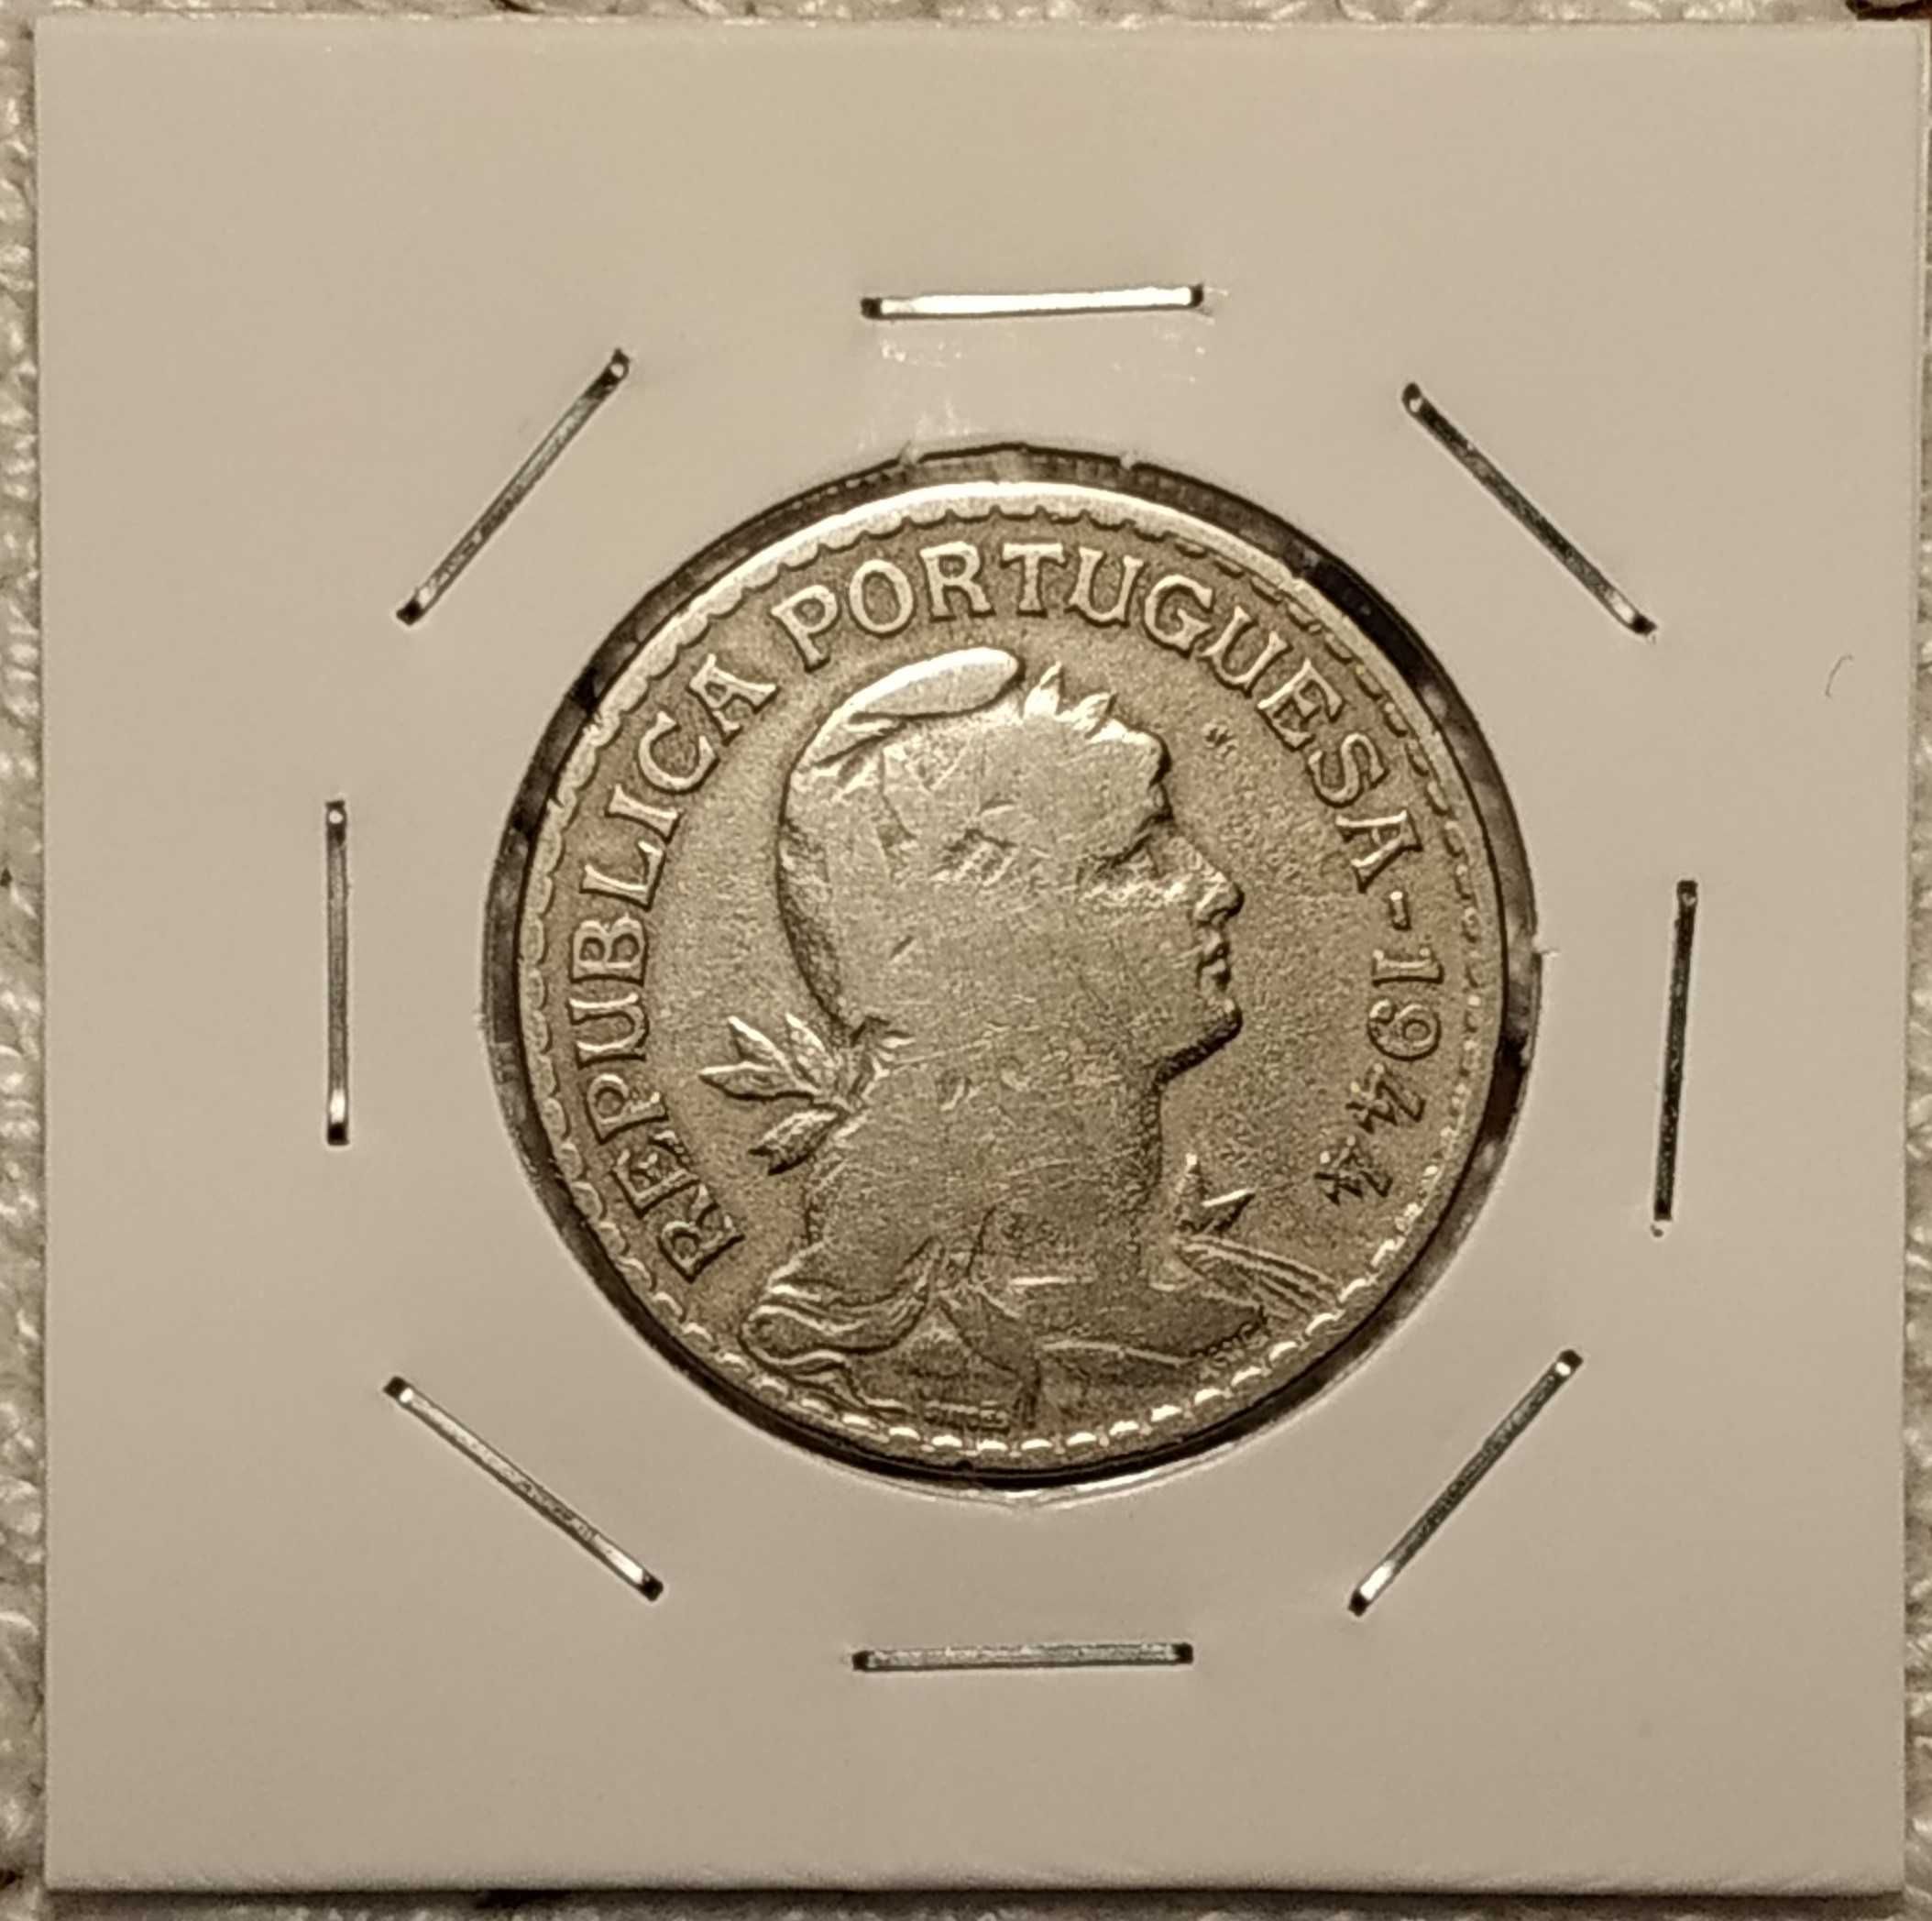 Portugal - moeda de 1 escudo de 1944